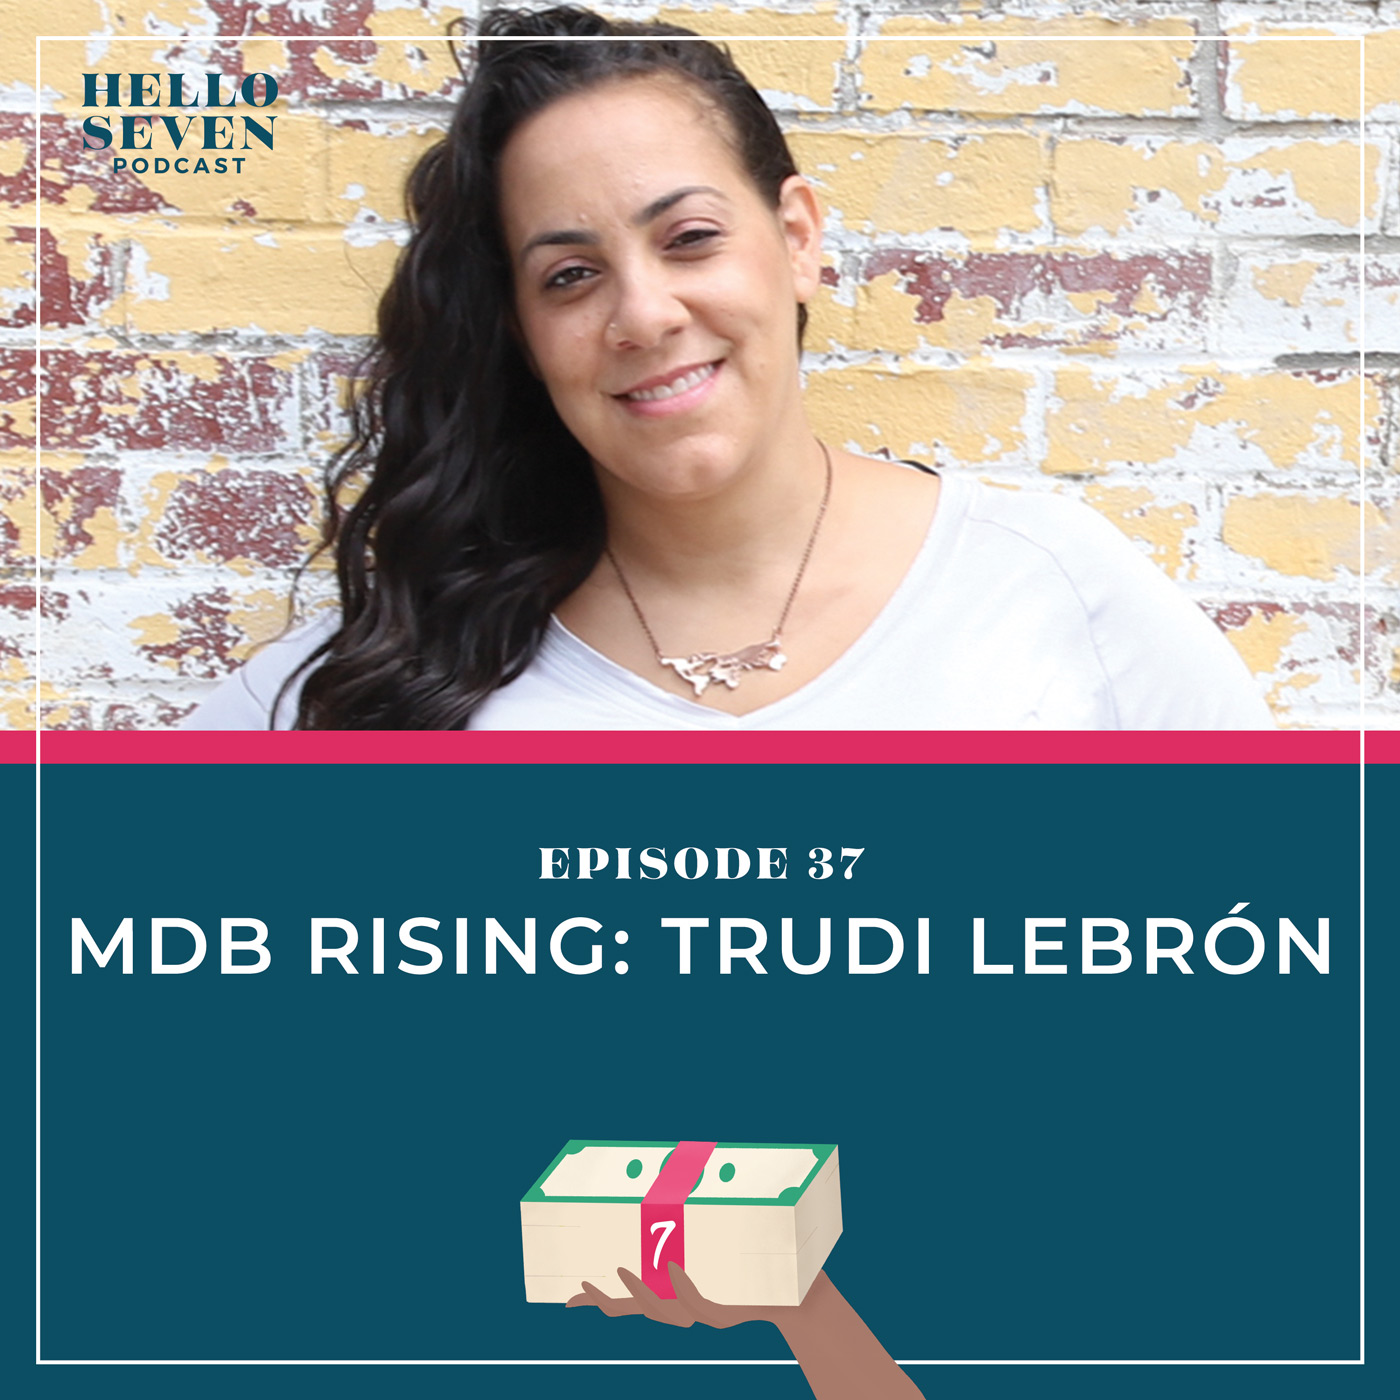 MDB Rising: Trudi Lebrón